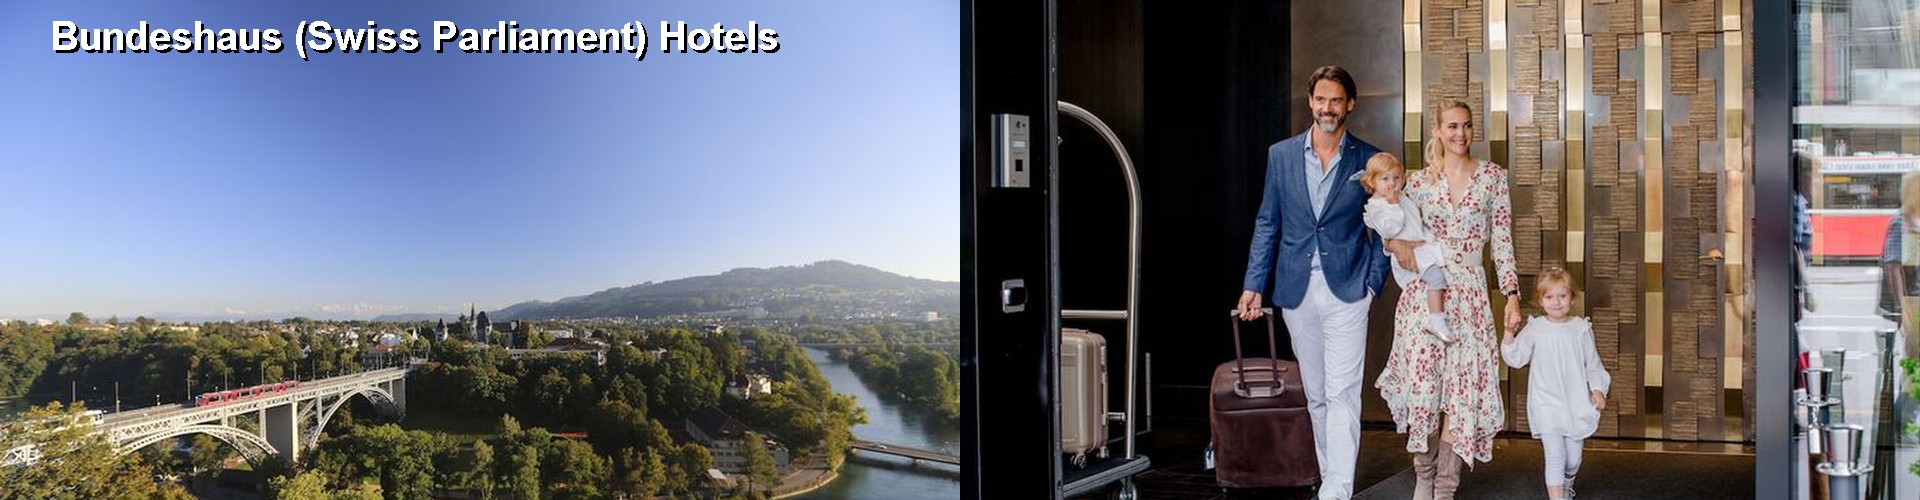 5 Best Hotels near Bundeshaus (Swiss Parliament)